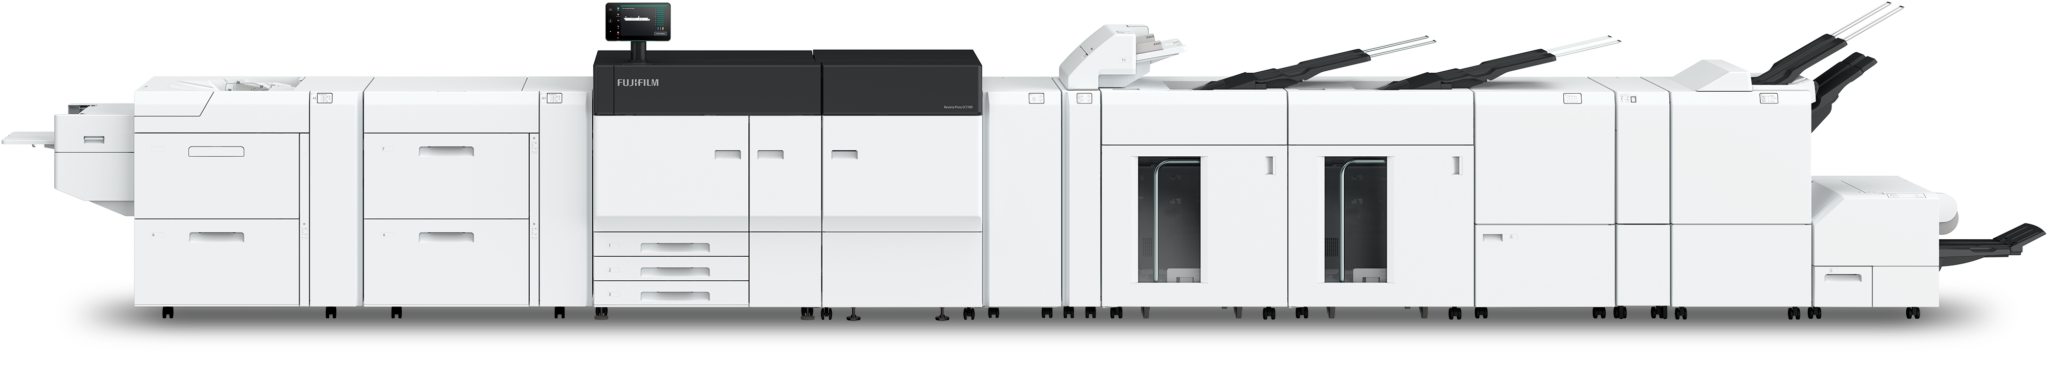 Fujifilm Revoria EC1100 Production Printer